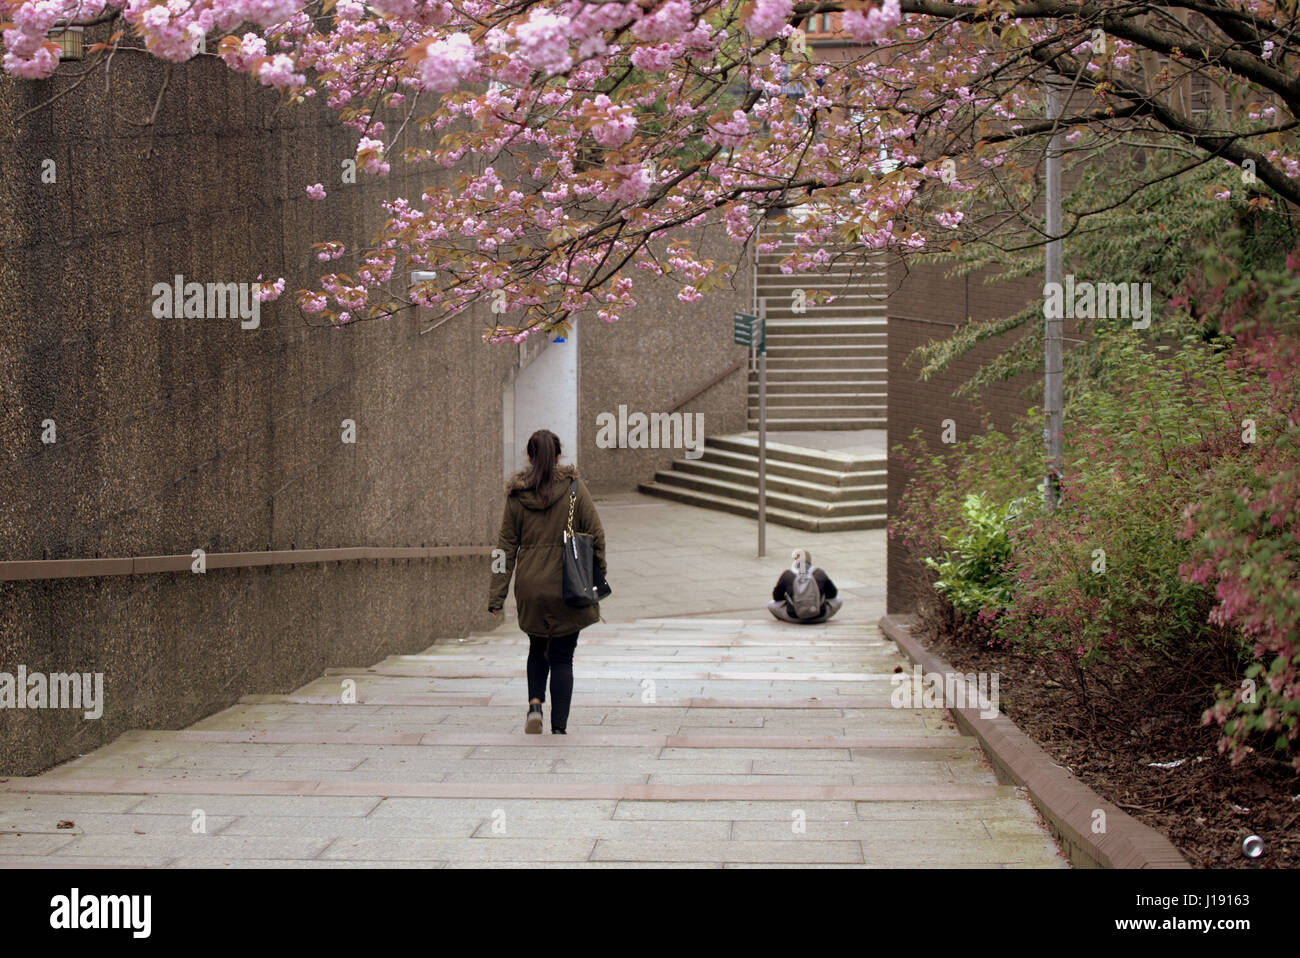 Glasgow George Cross Street scene pink cherry blossom printemps personne marchant cityscape Banque D'Images